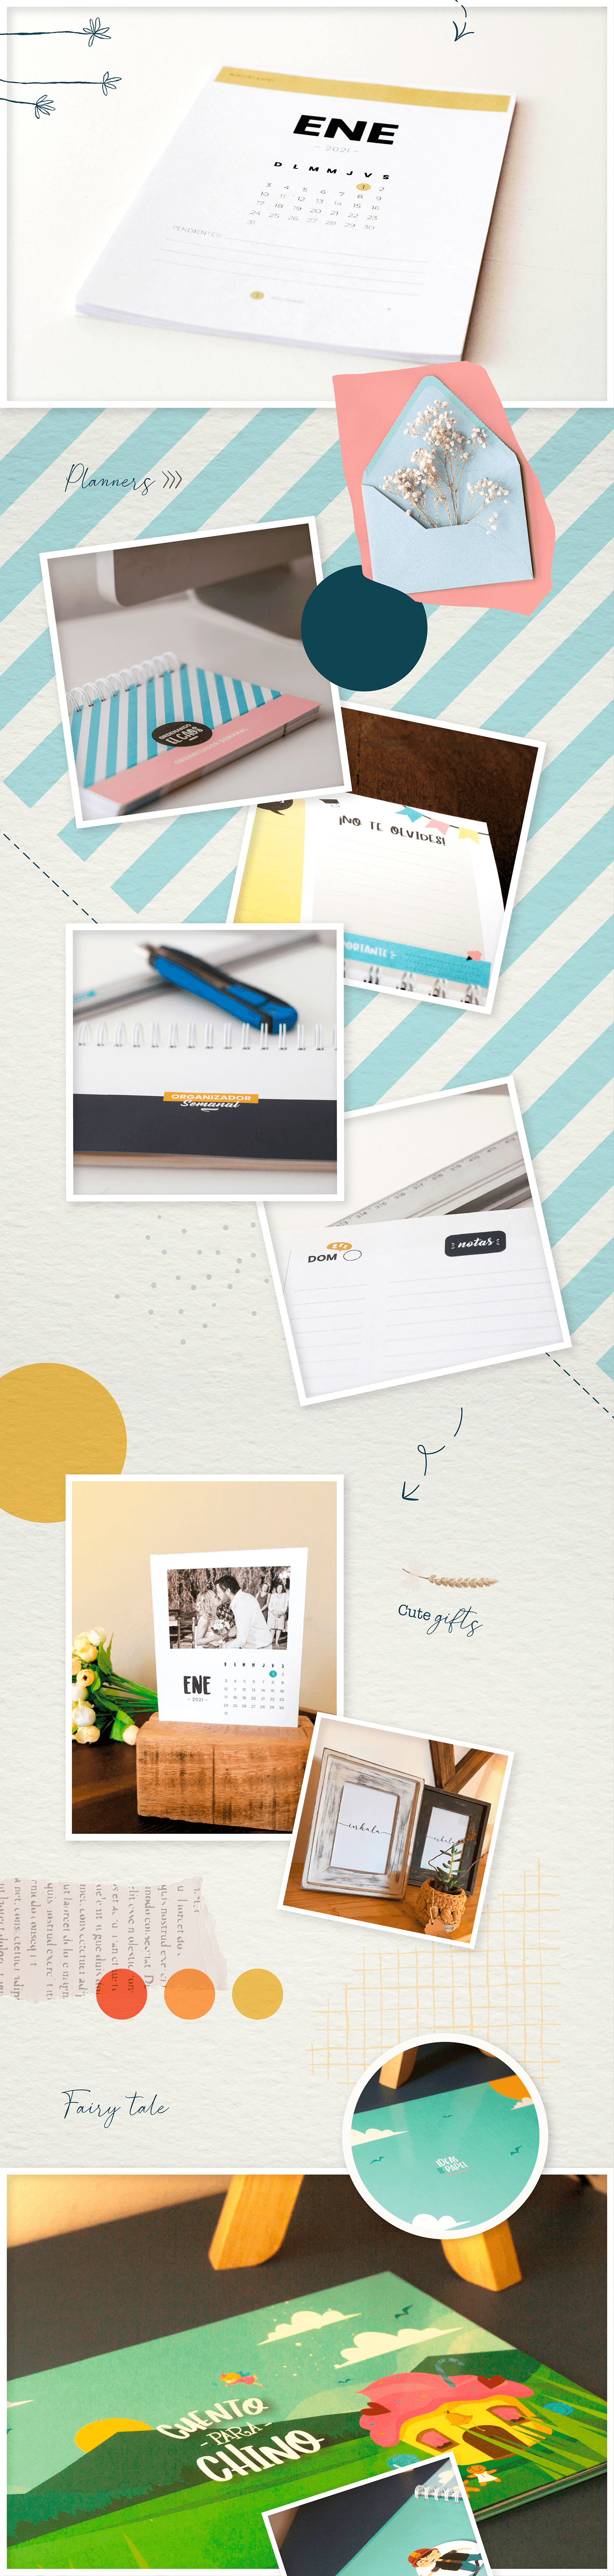 diaries planner calendar notebook journal editorial Graphic Designer visual identity organization cute